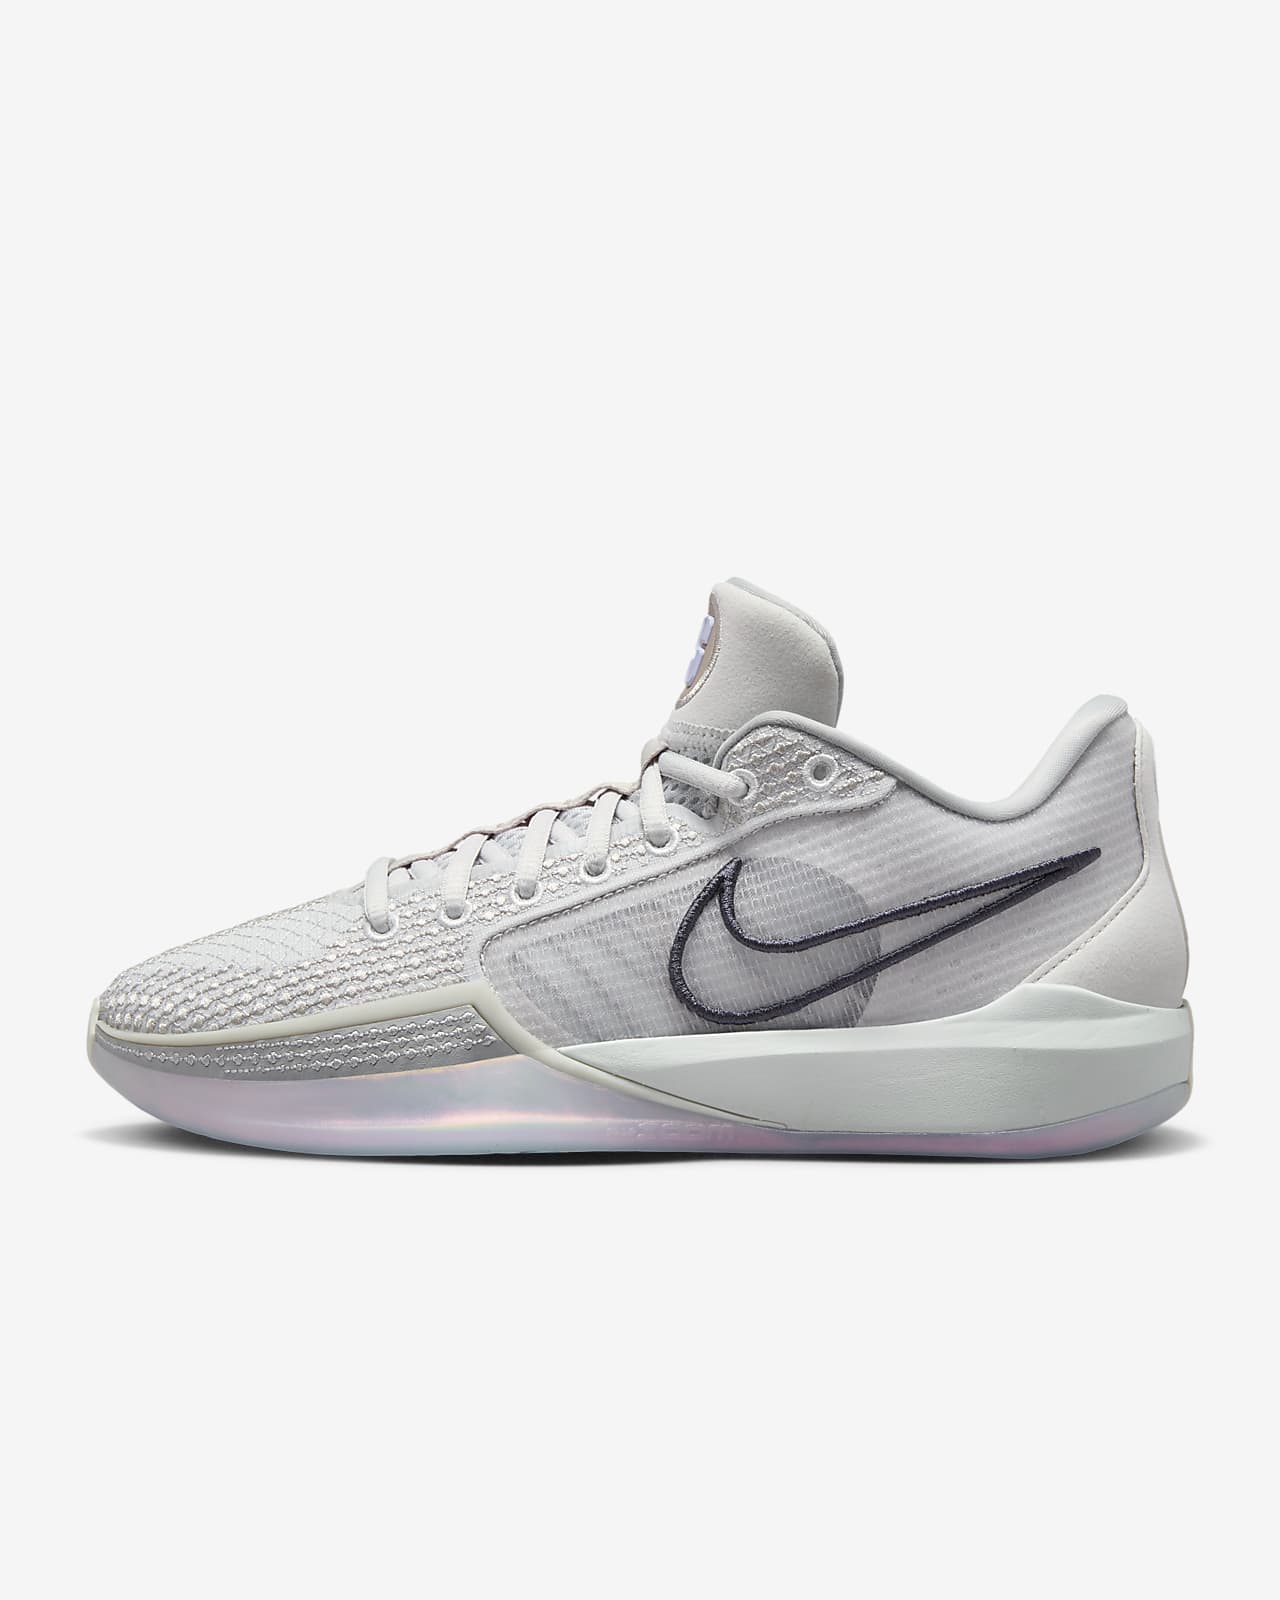 Nike Kobe A.D. Basketball Shoes (Black) Size 10